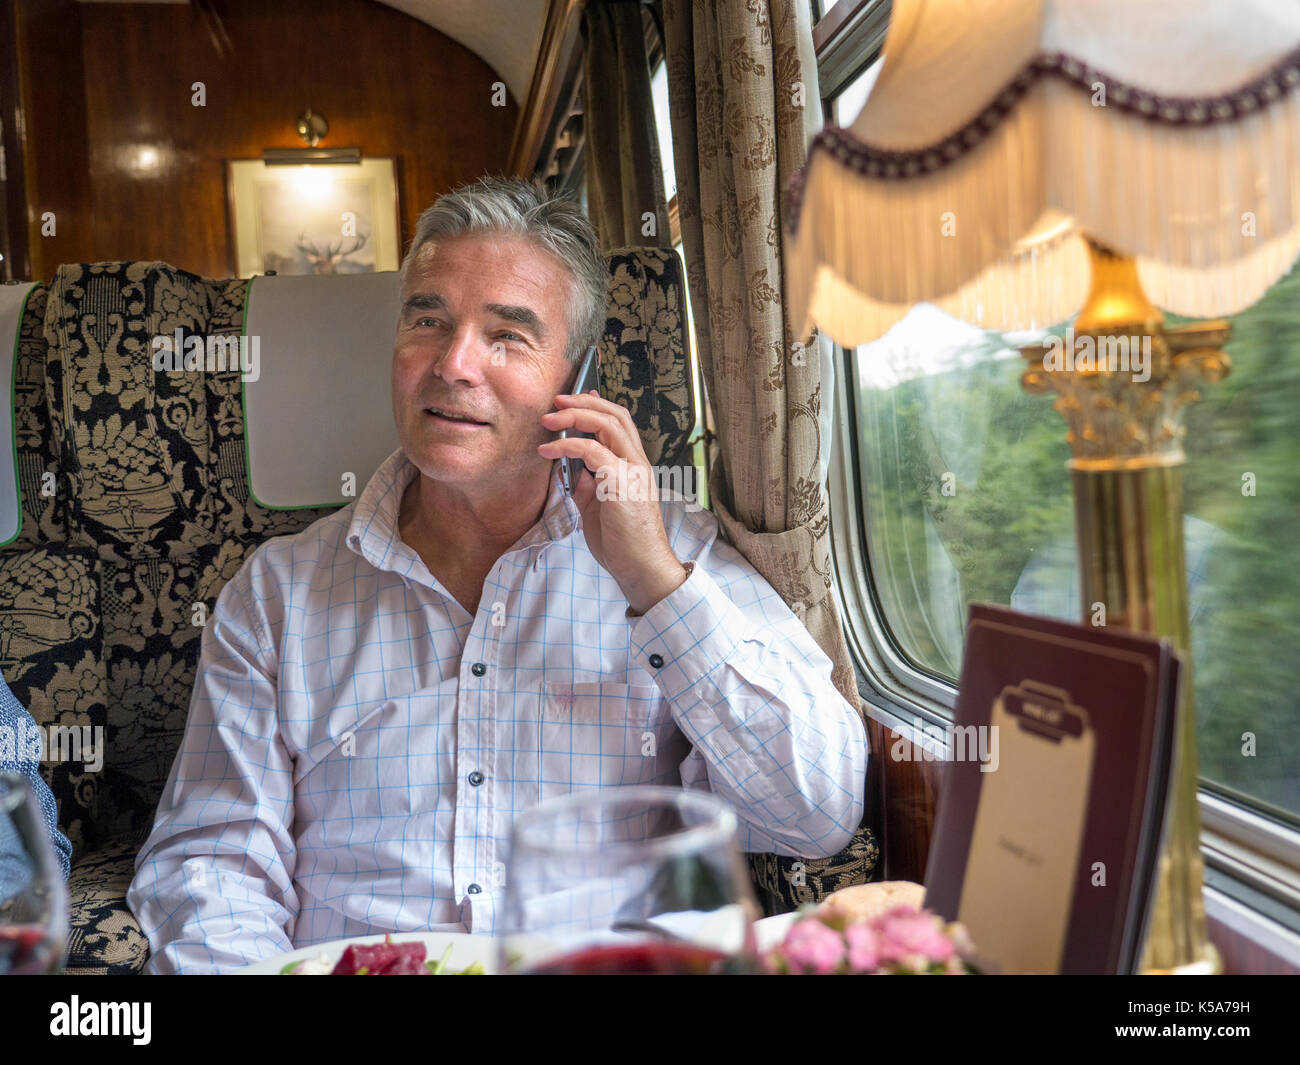 LUXURY First class train carriage & businessman in restaurant rail car talking on smartphone enjoying train trip in a luxury Pullman railway carriage Stock Photo